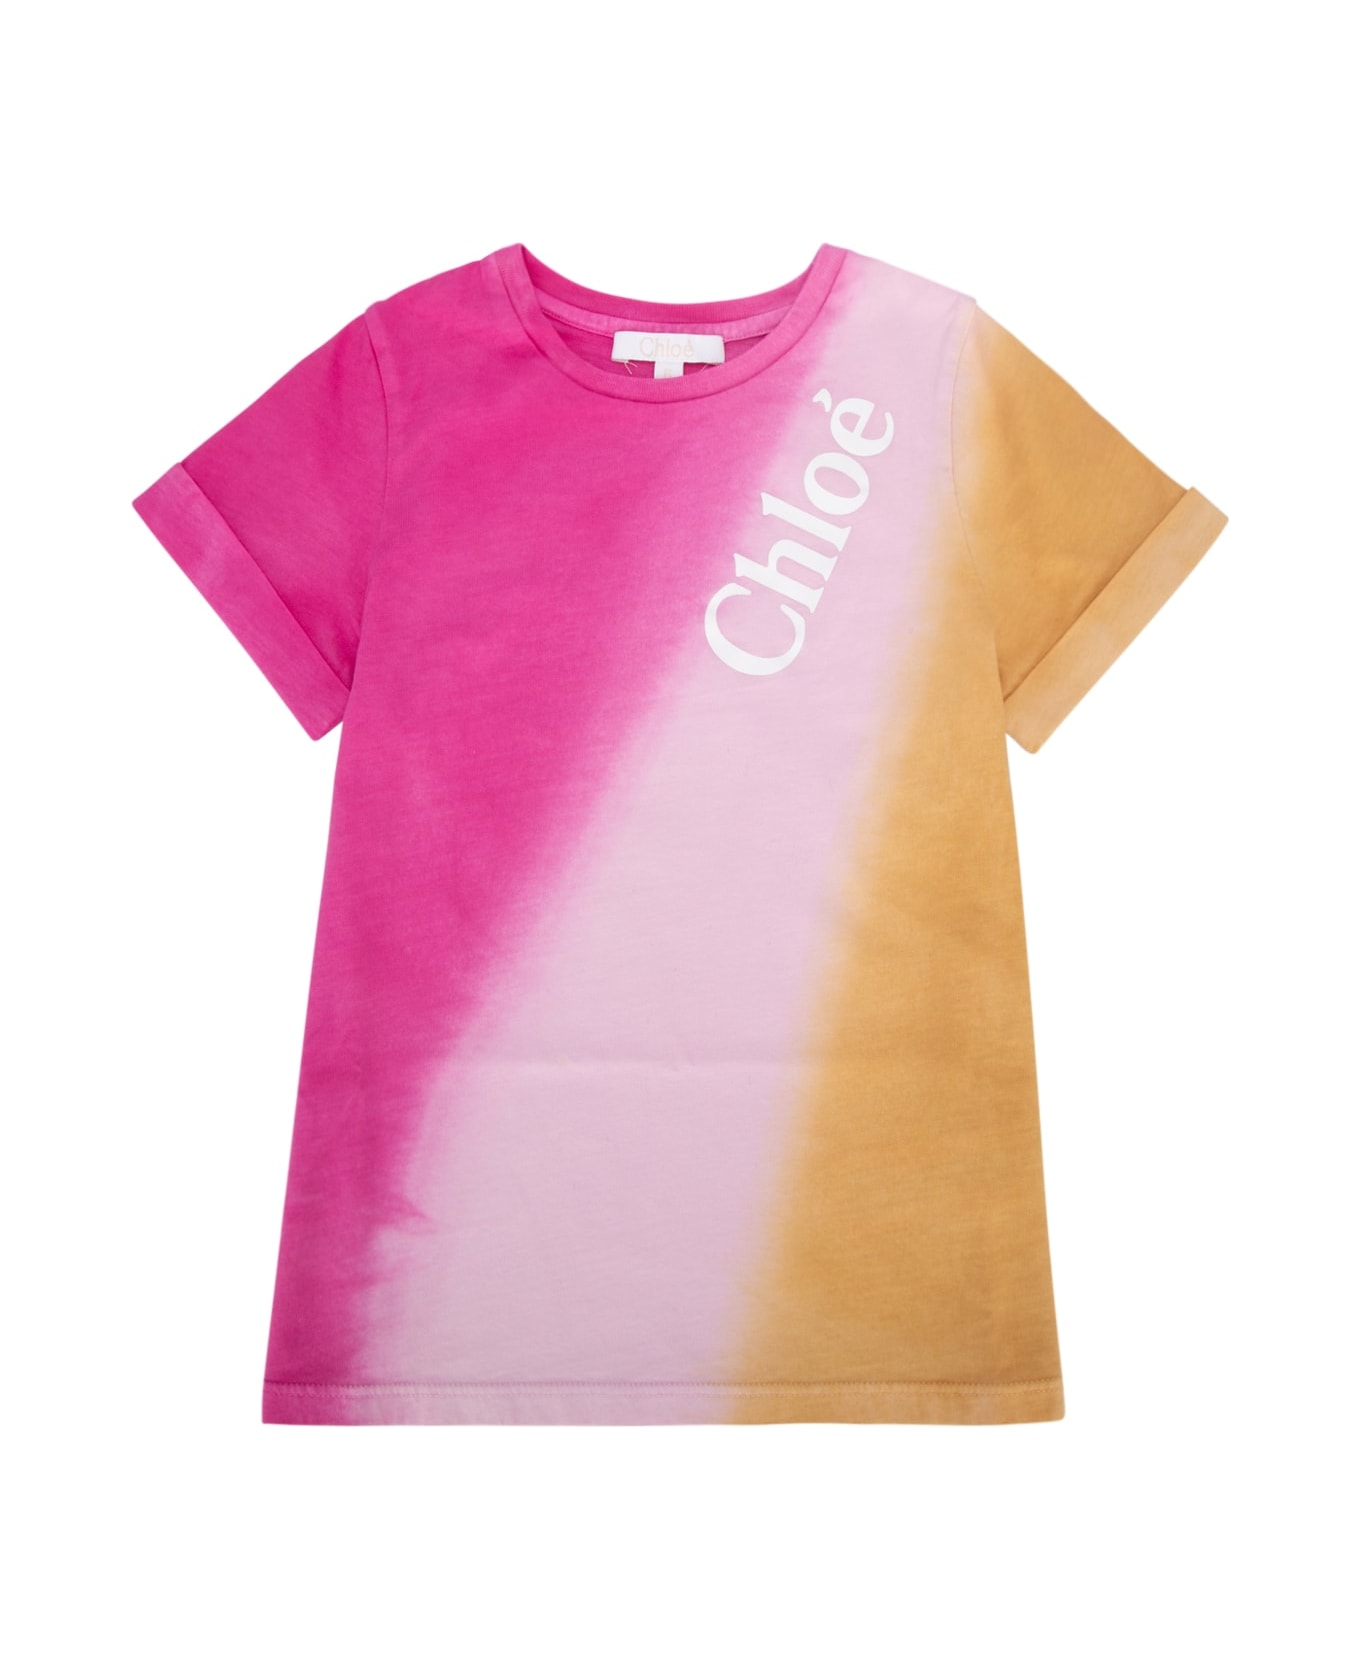 Chloé T-shirt - ROSAGIALLO